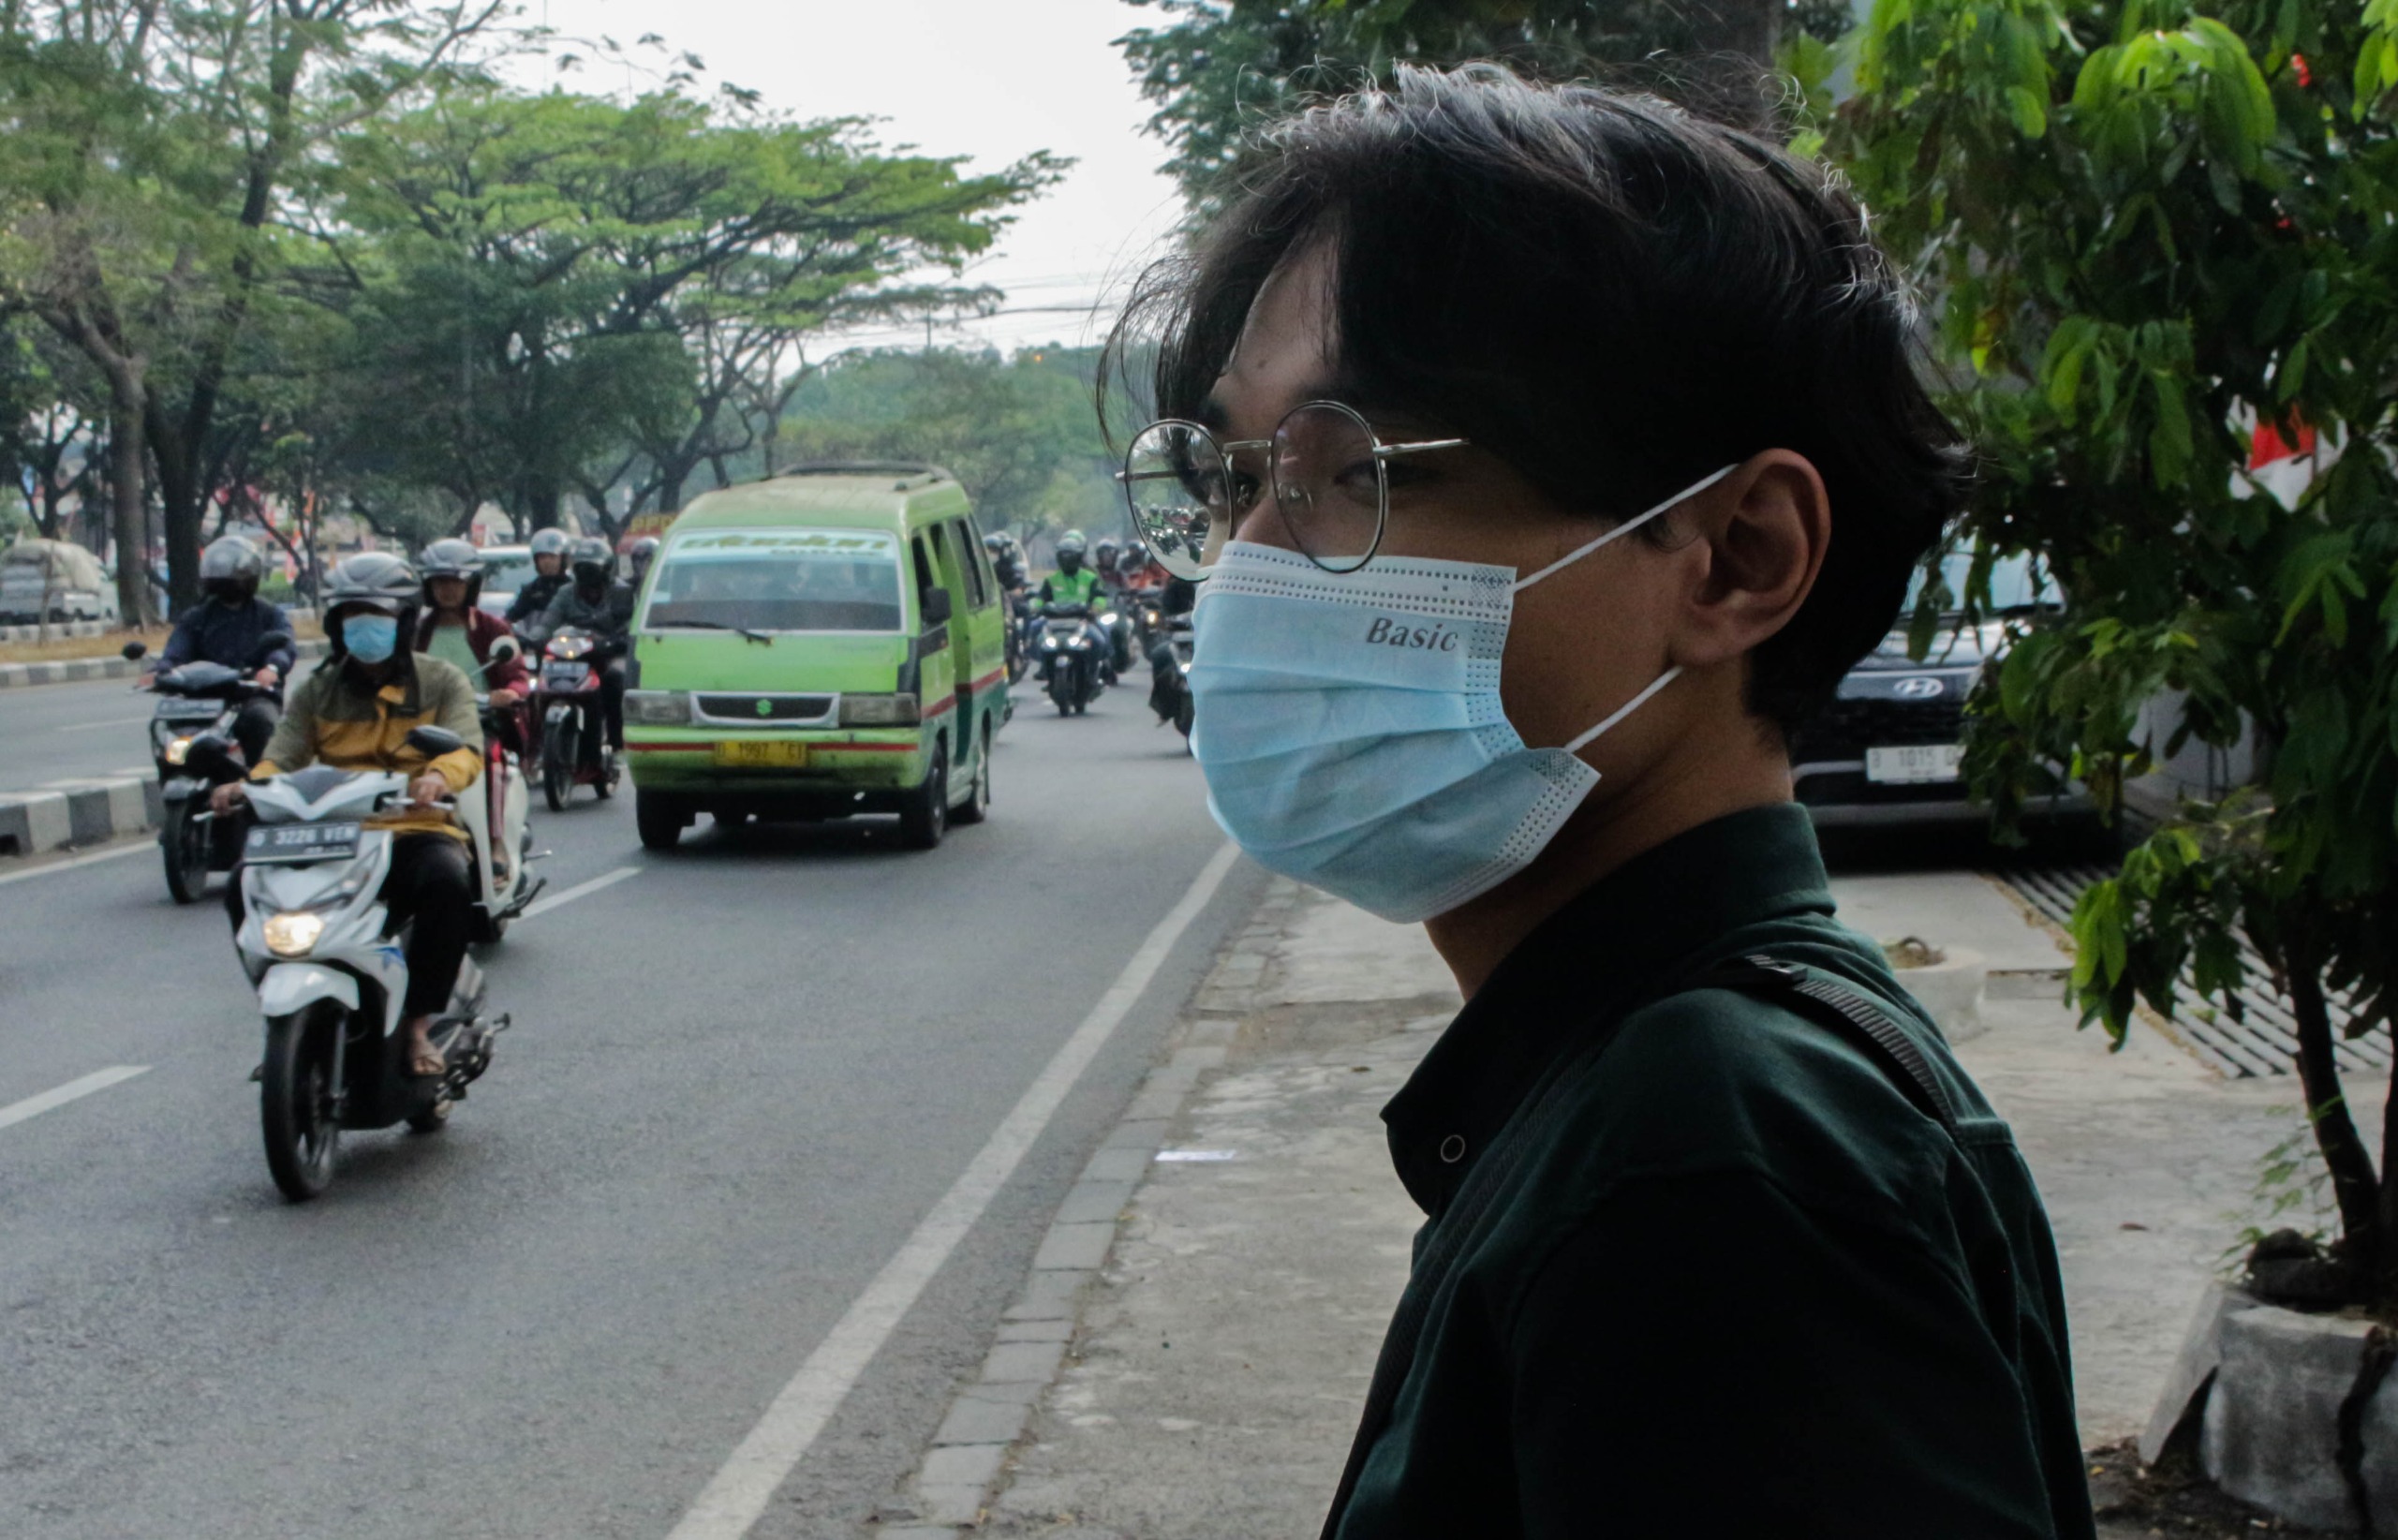 Dinkes Kota Bandung Terkait Subvarian Covid-19 Baru